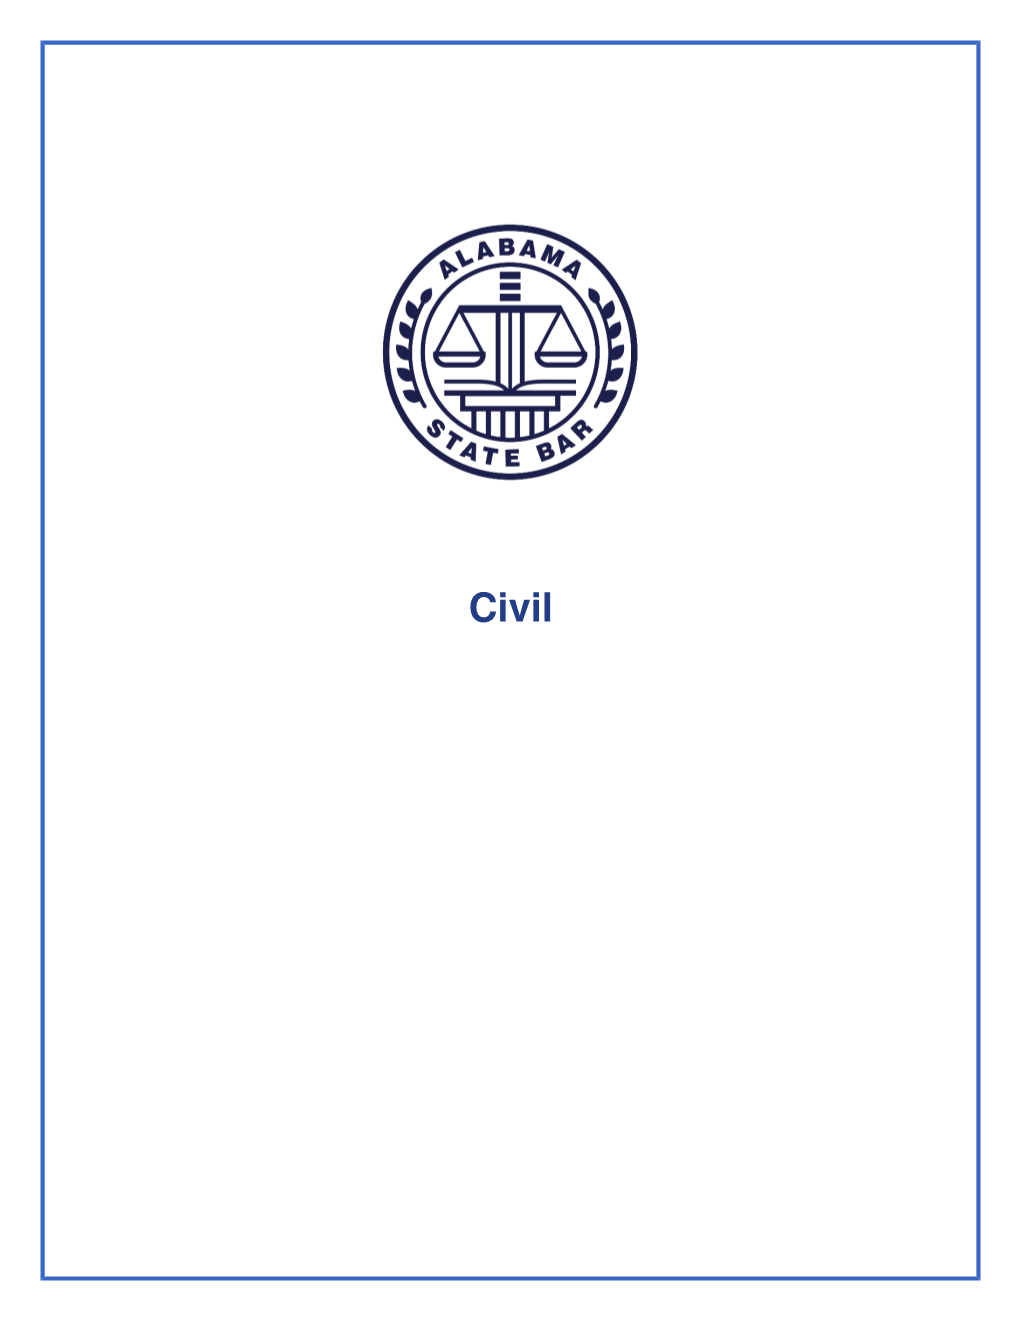 Civil Civil February 27, 2020